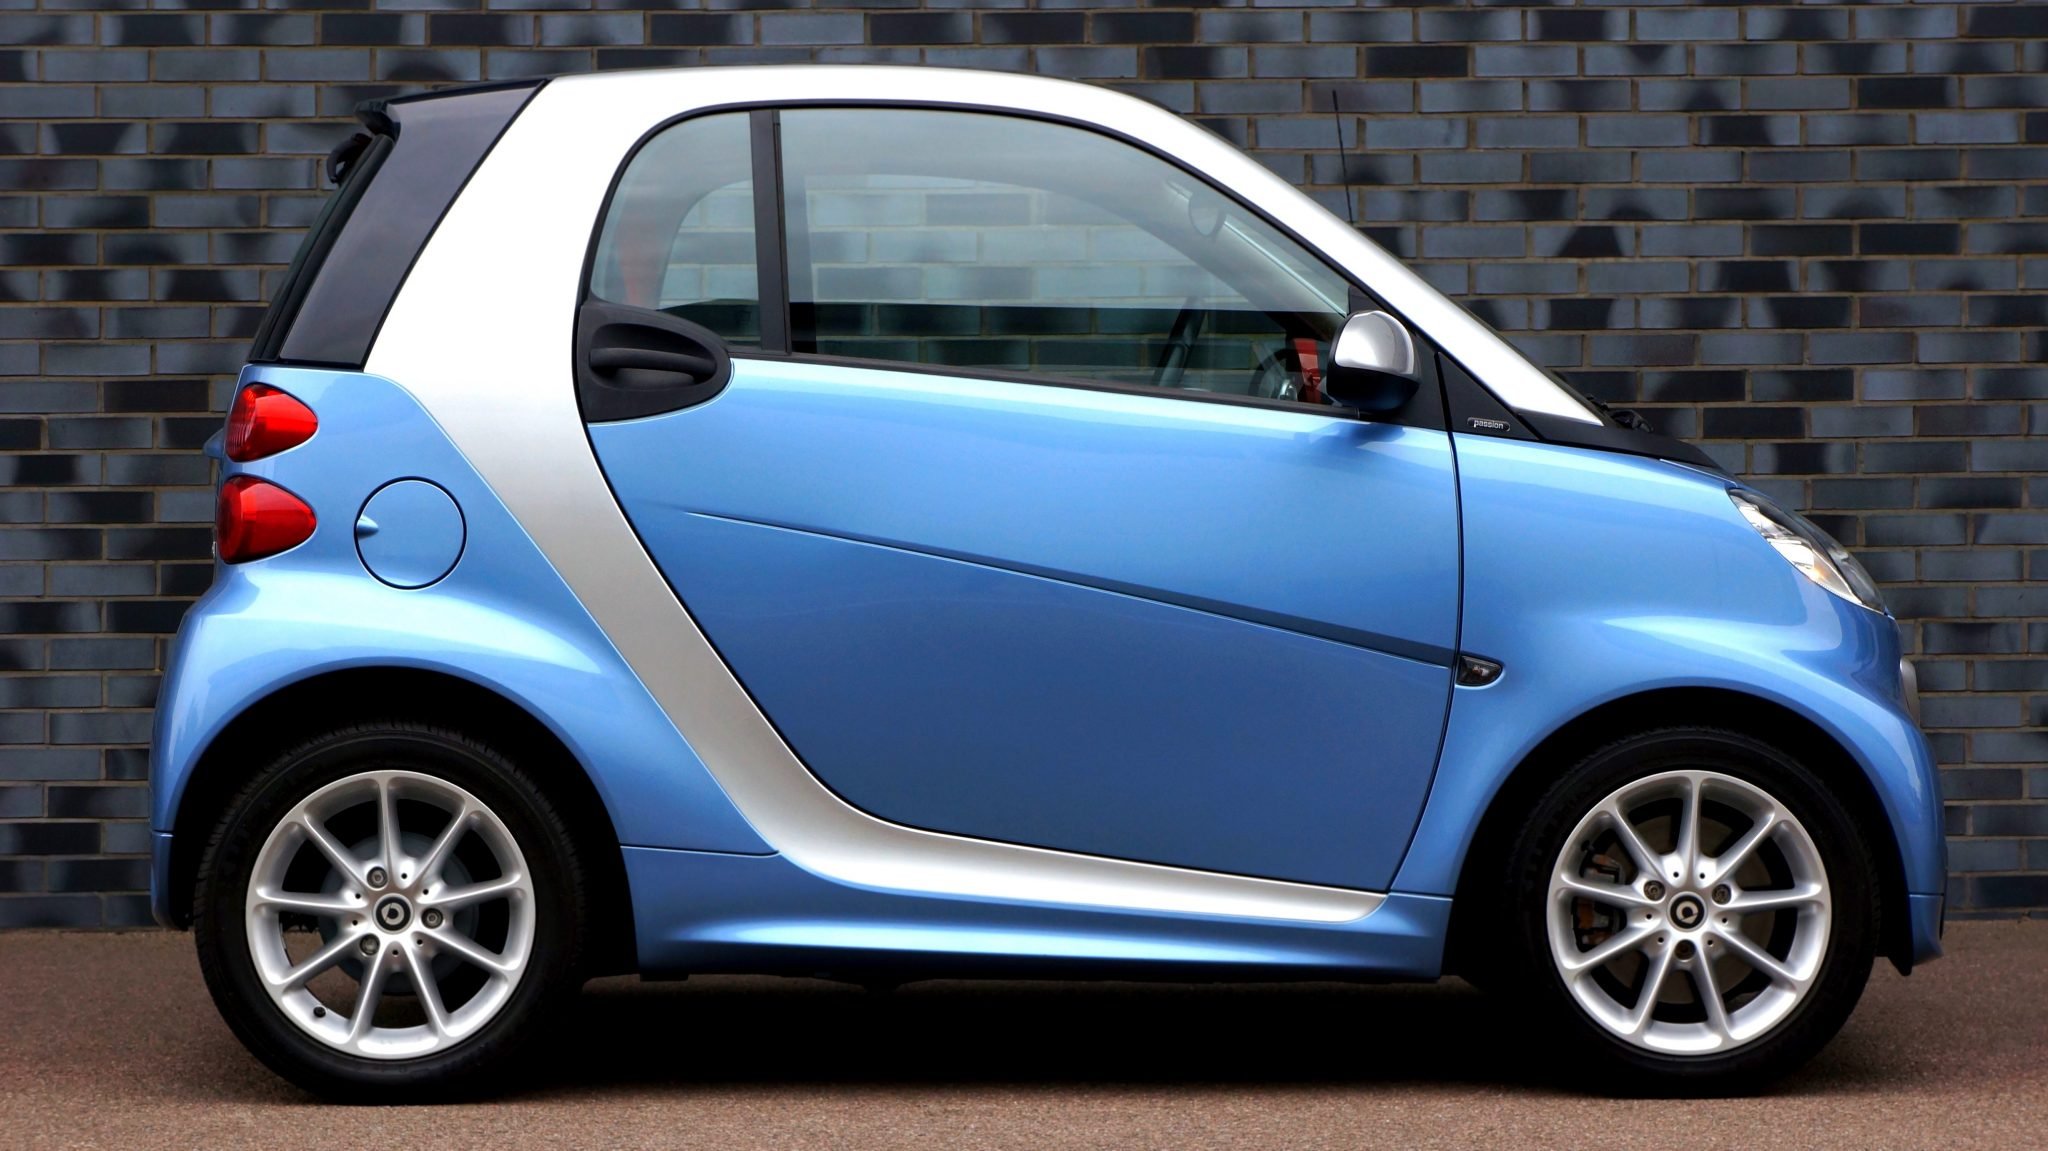 Мини-кар Smart Fortwo 2. BMW смарт 2х дверная малолитражка. Smart Fortwo голубой. БМВ смарт 4 дверная. Двухместное авто